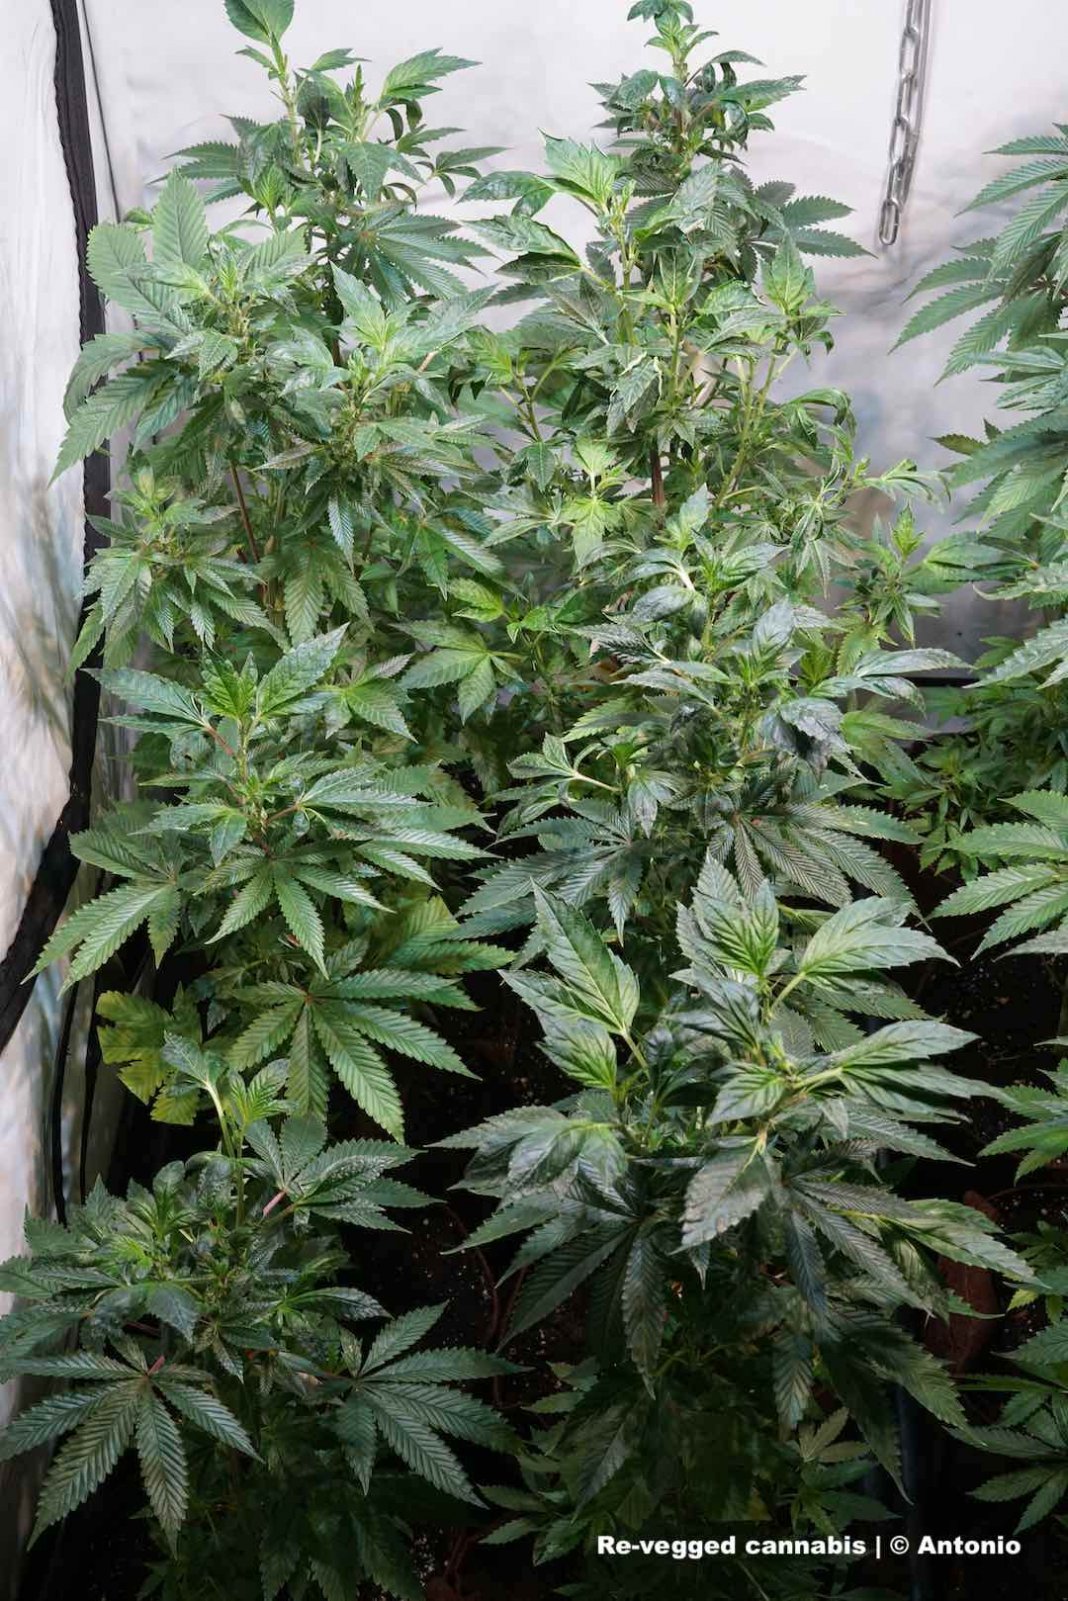 re-vegged-cannabis-pant-at-start-of-flowering-stage-by-antonio.jpg